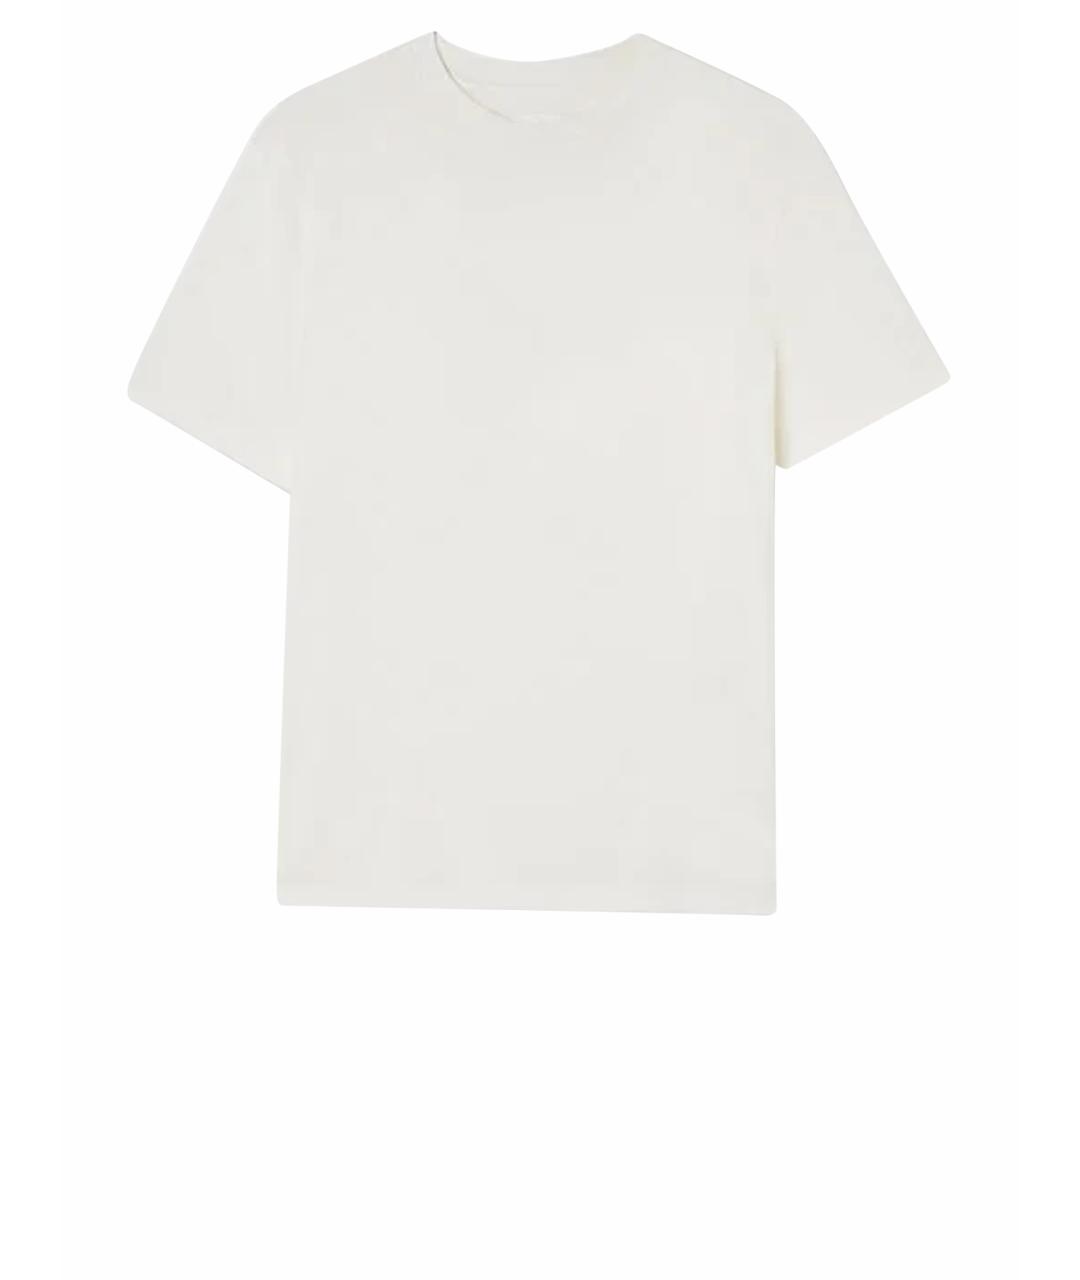 JIL SANDER Белая хлопковая футболка, фото 1